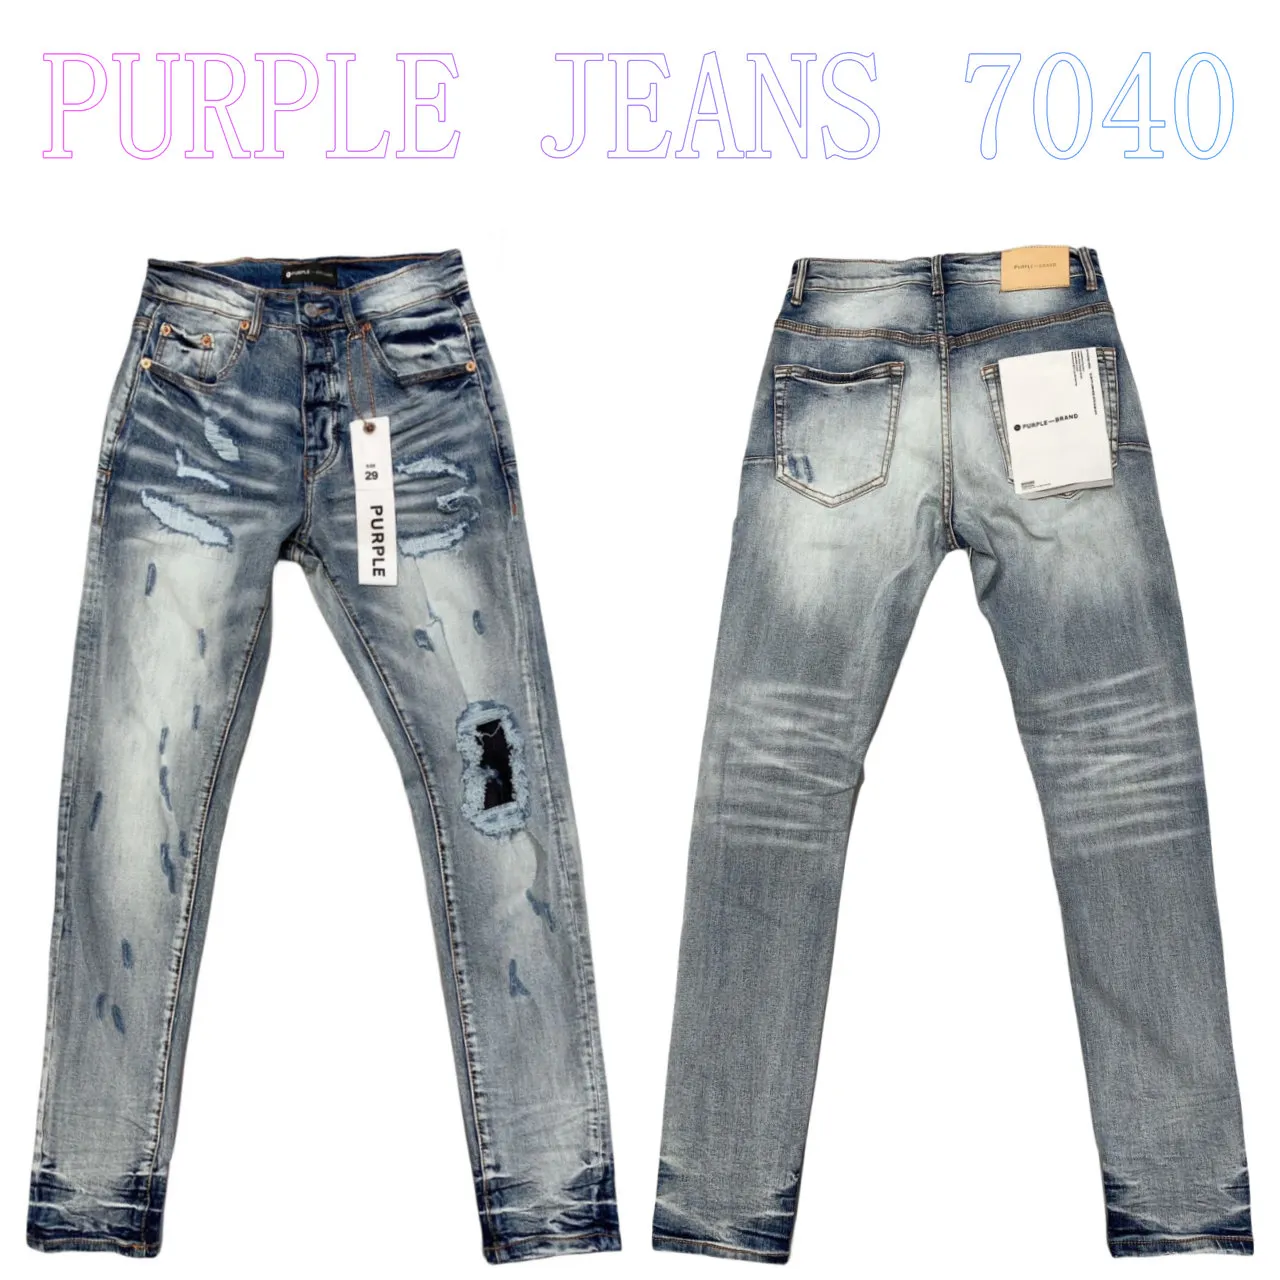 Mens Purple Designer Jeans Fashion Distressed Ripped Bikers Womens Denim Cargo For Men Black Pants PU7040